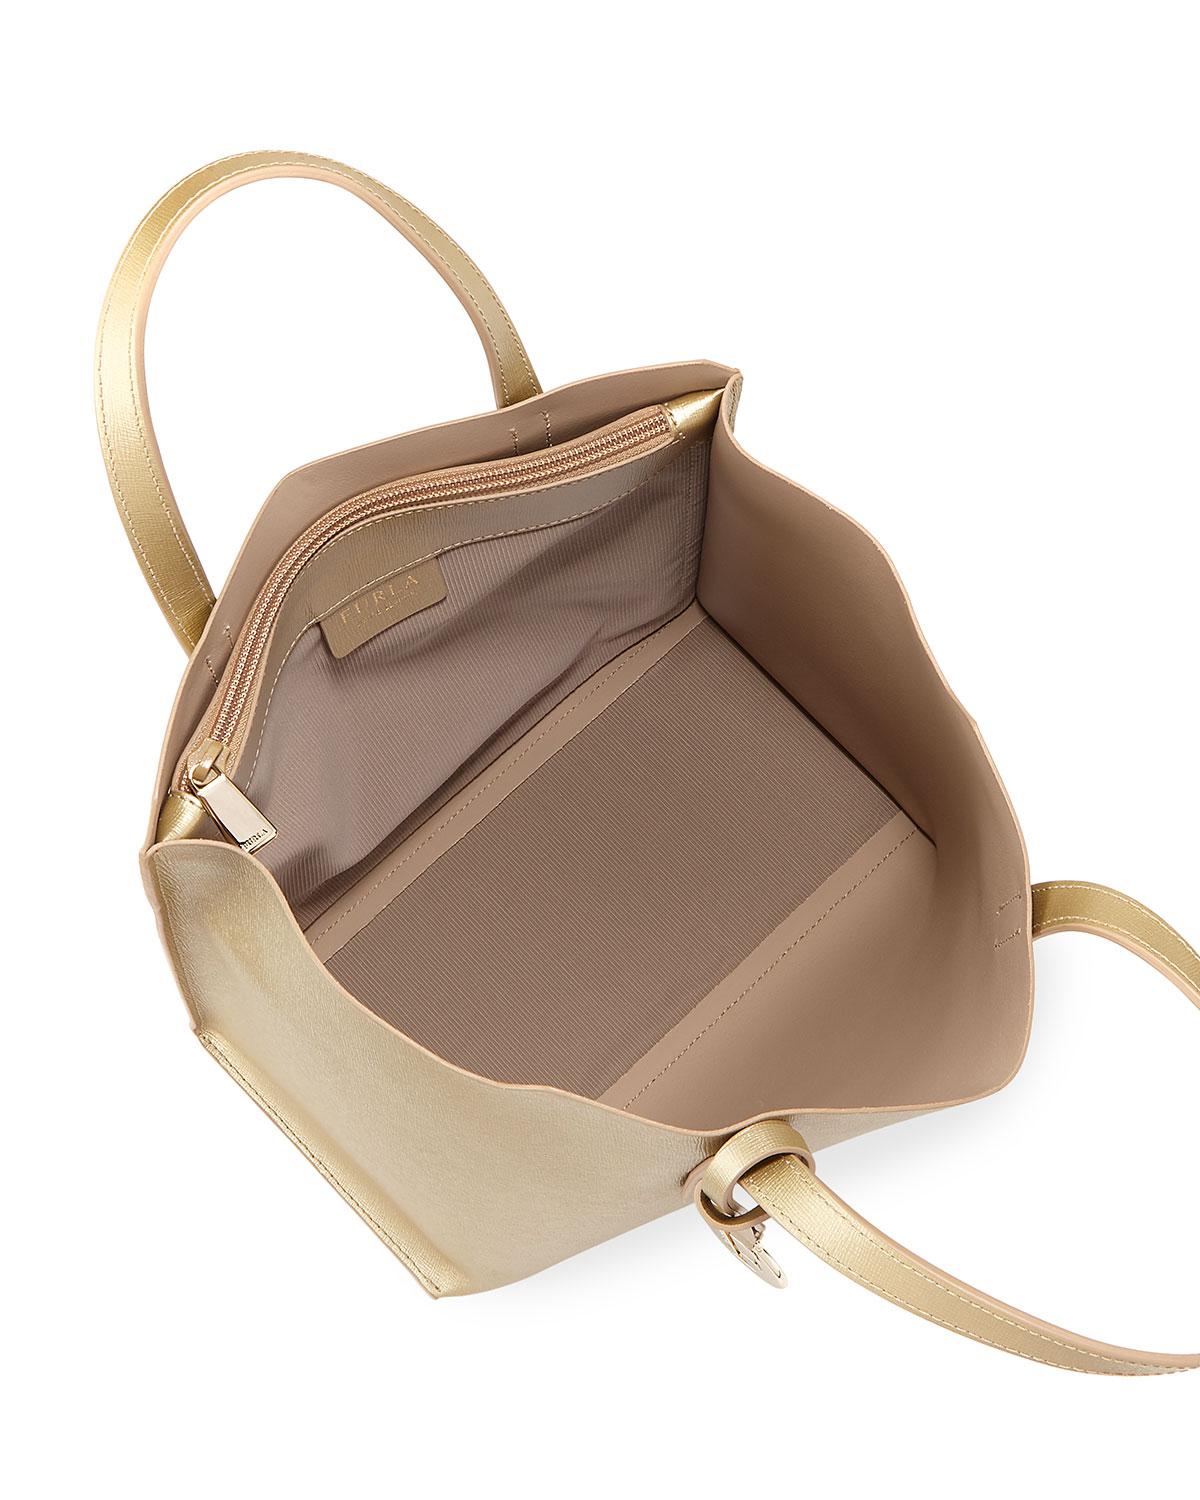 Furla Leather Sally Small Saffiano Tote Bag in Gold (Metallic) - Lyst